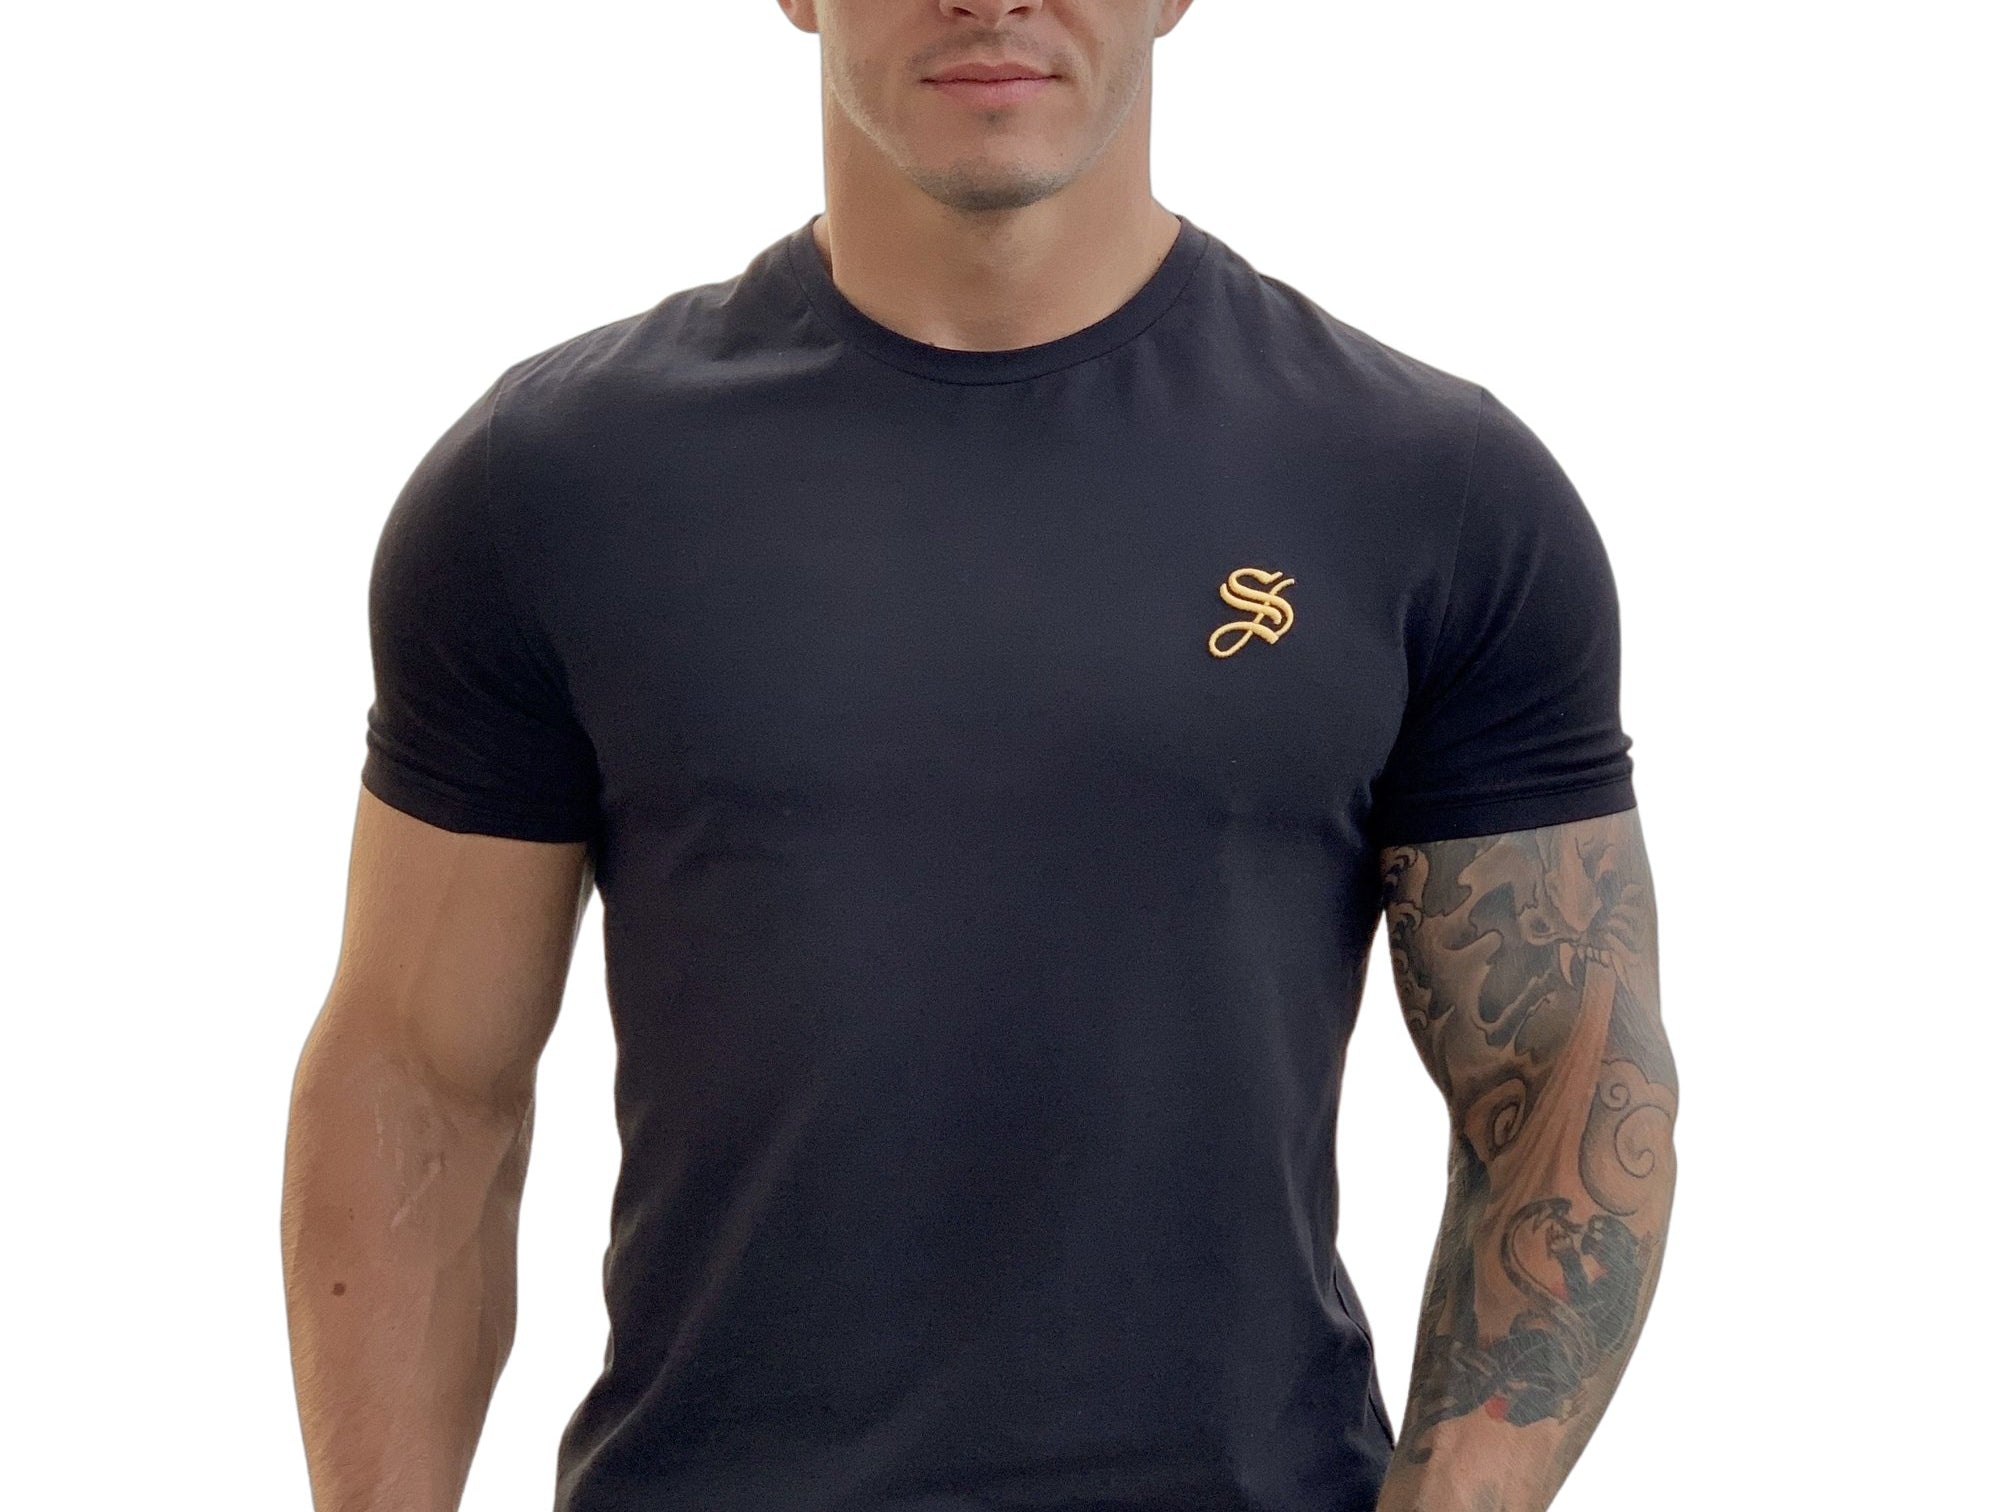 Black Eagle - Black T-shirt for Men - Sarman Fashion - Wholesale Clothing Fashion Brand for Men from Canada